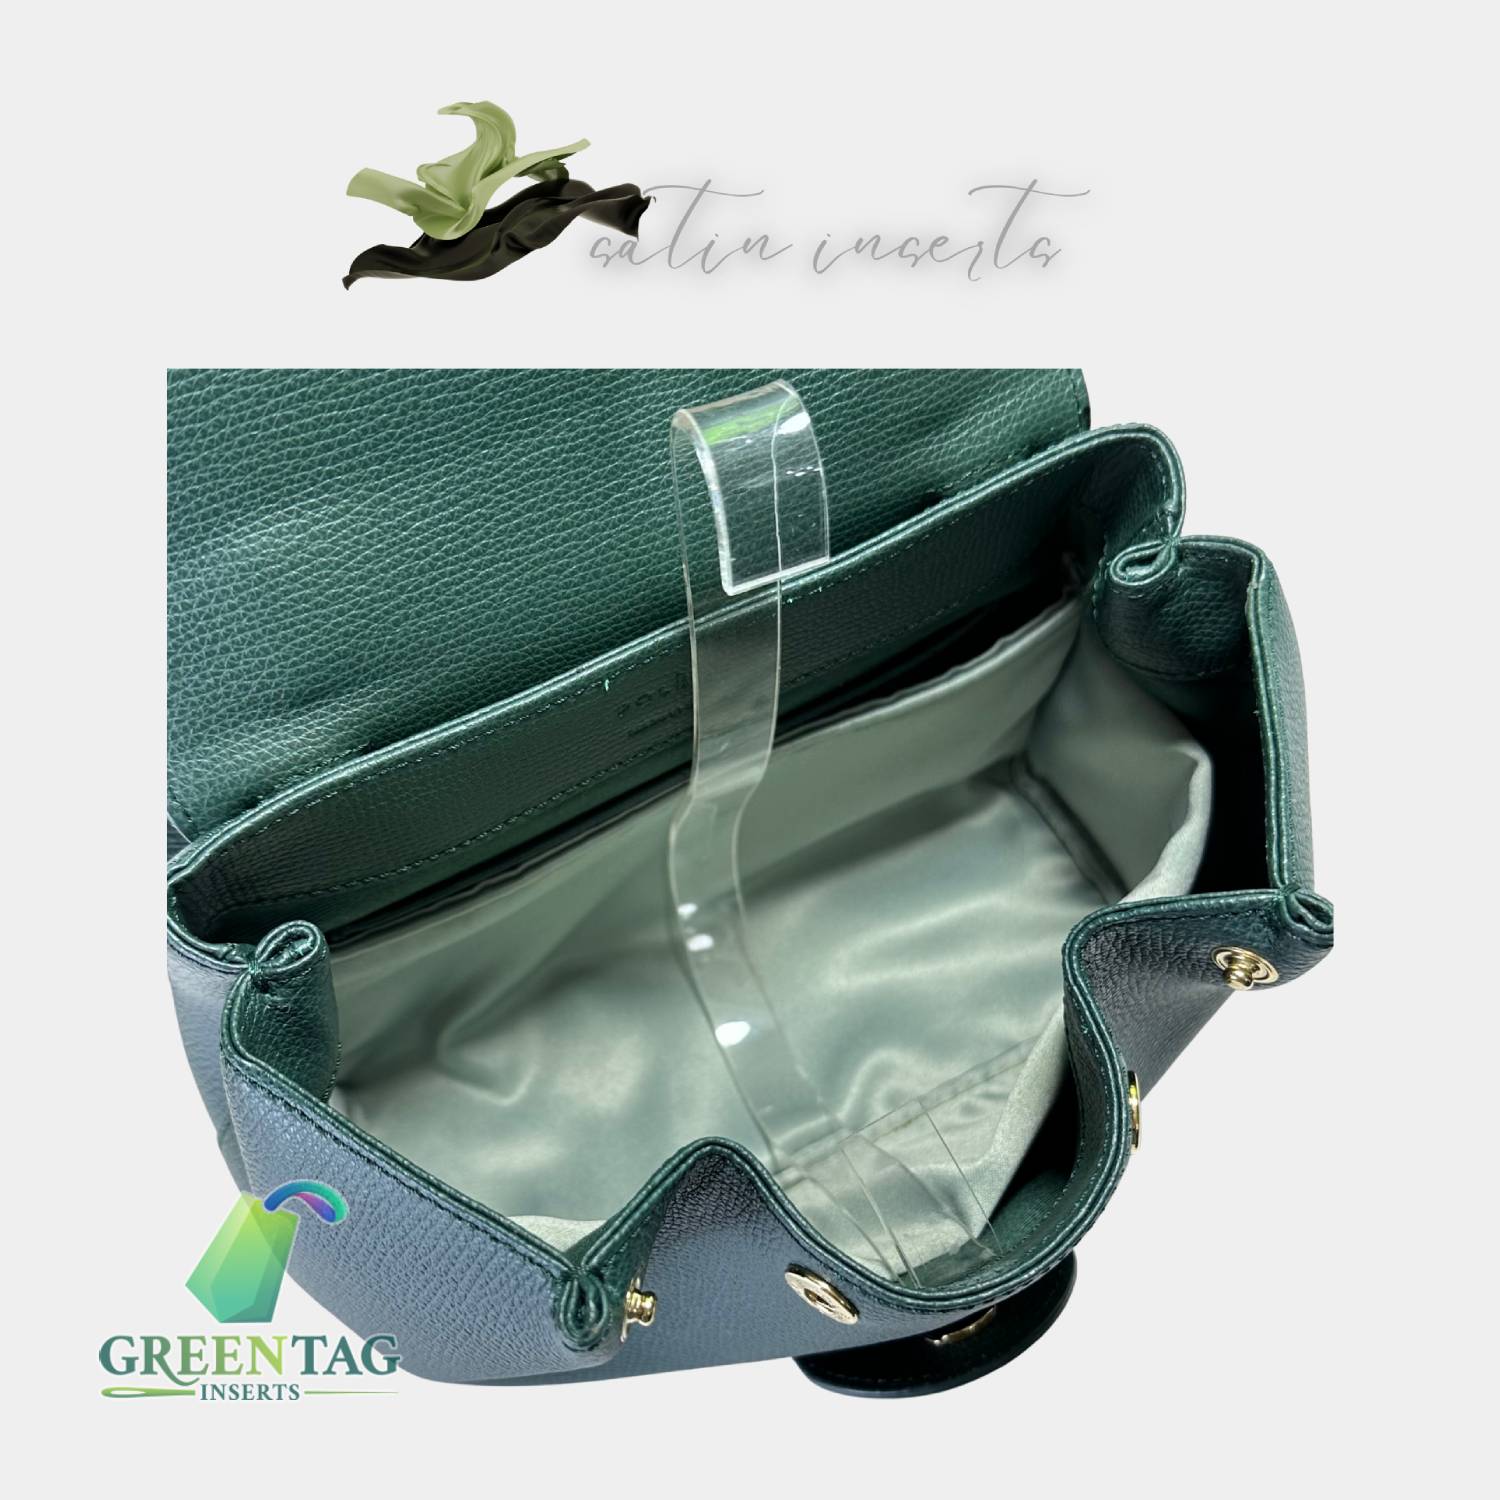 Polène Numero Uno Nano Leather Handle Bag w/ Tags - Green Handle